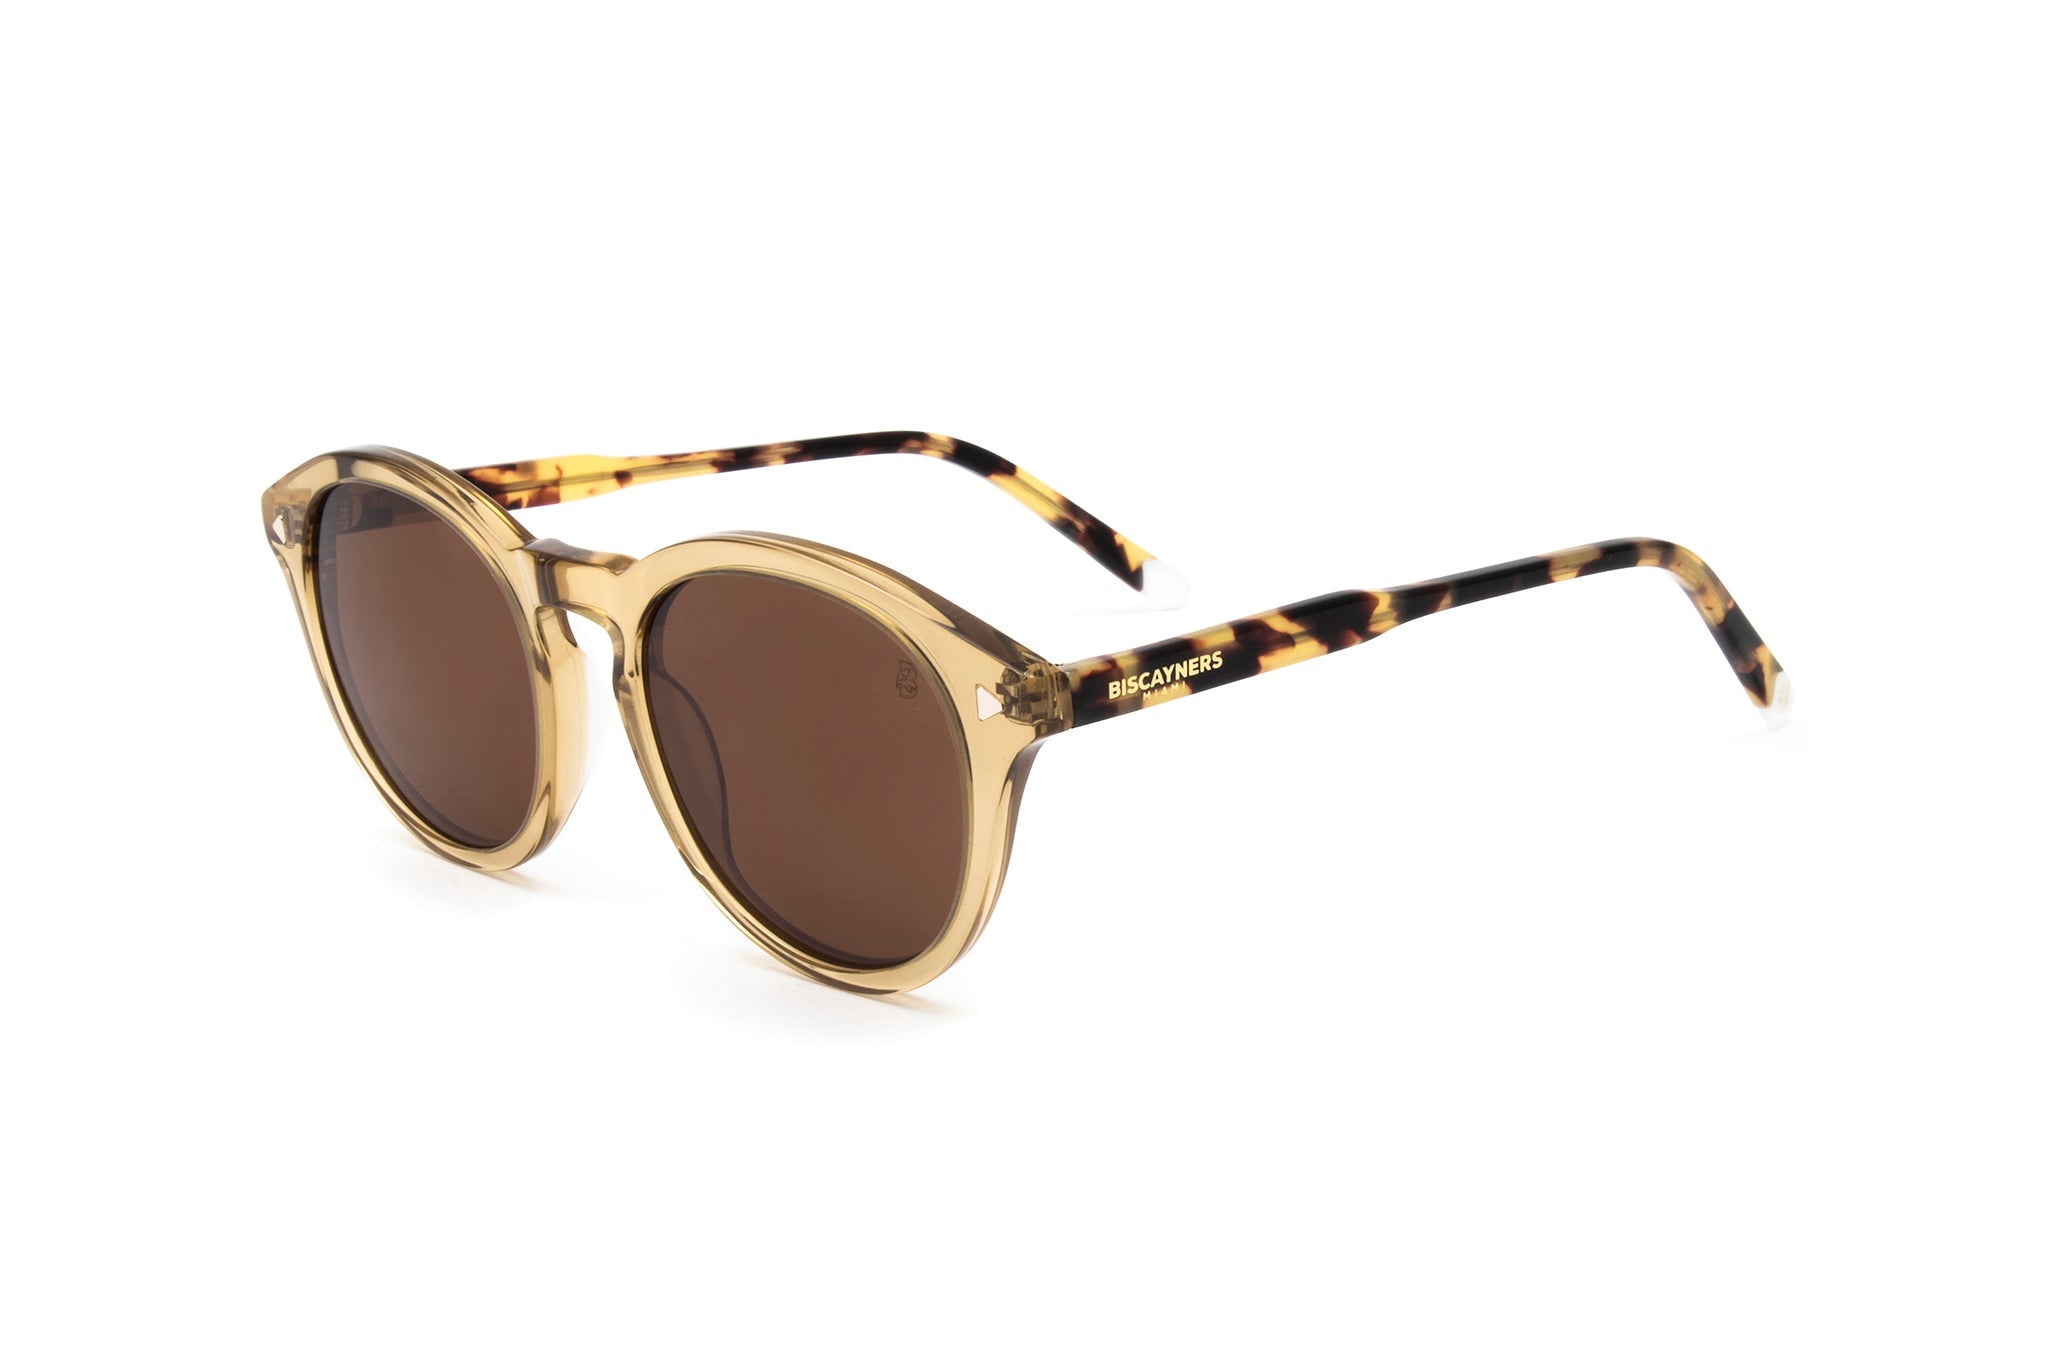 Biscayners Sunglasses |  Sunrise Honey